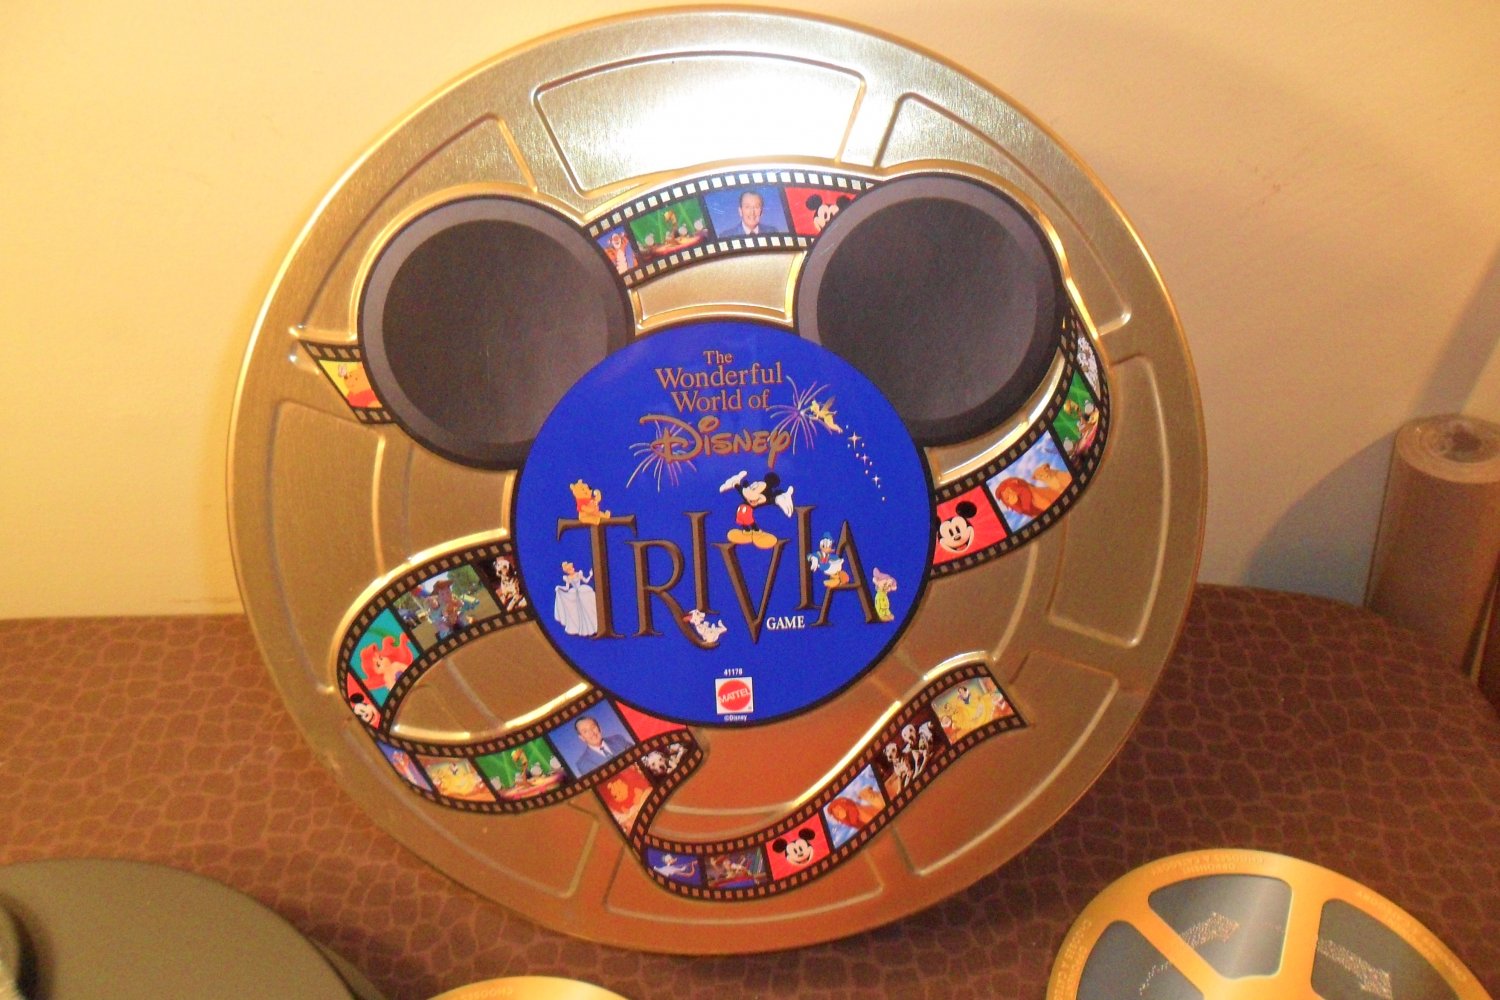 The Wonderful World of Disney Trivia Game in Collectible Round Tin MATTEL 1997